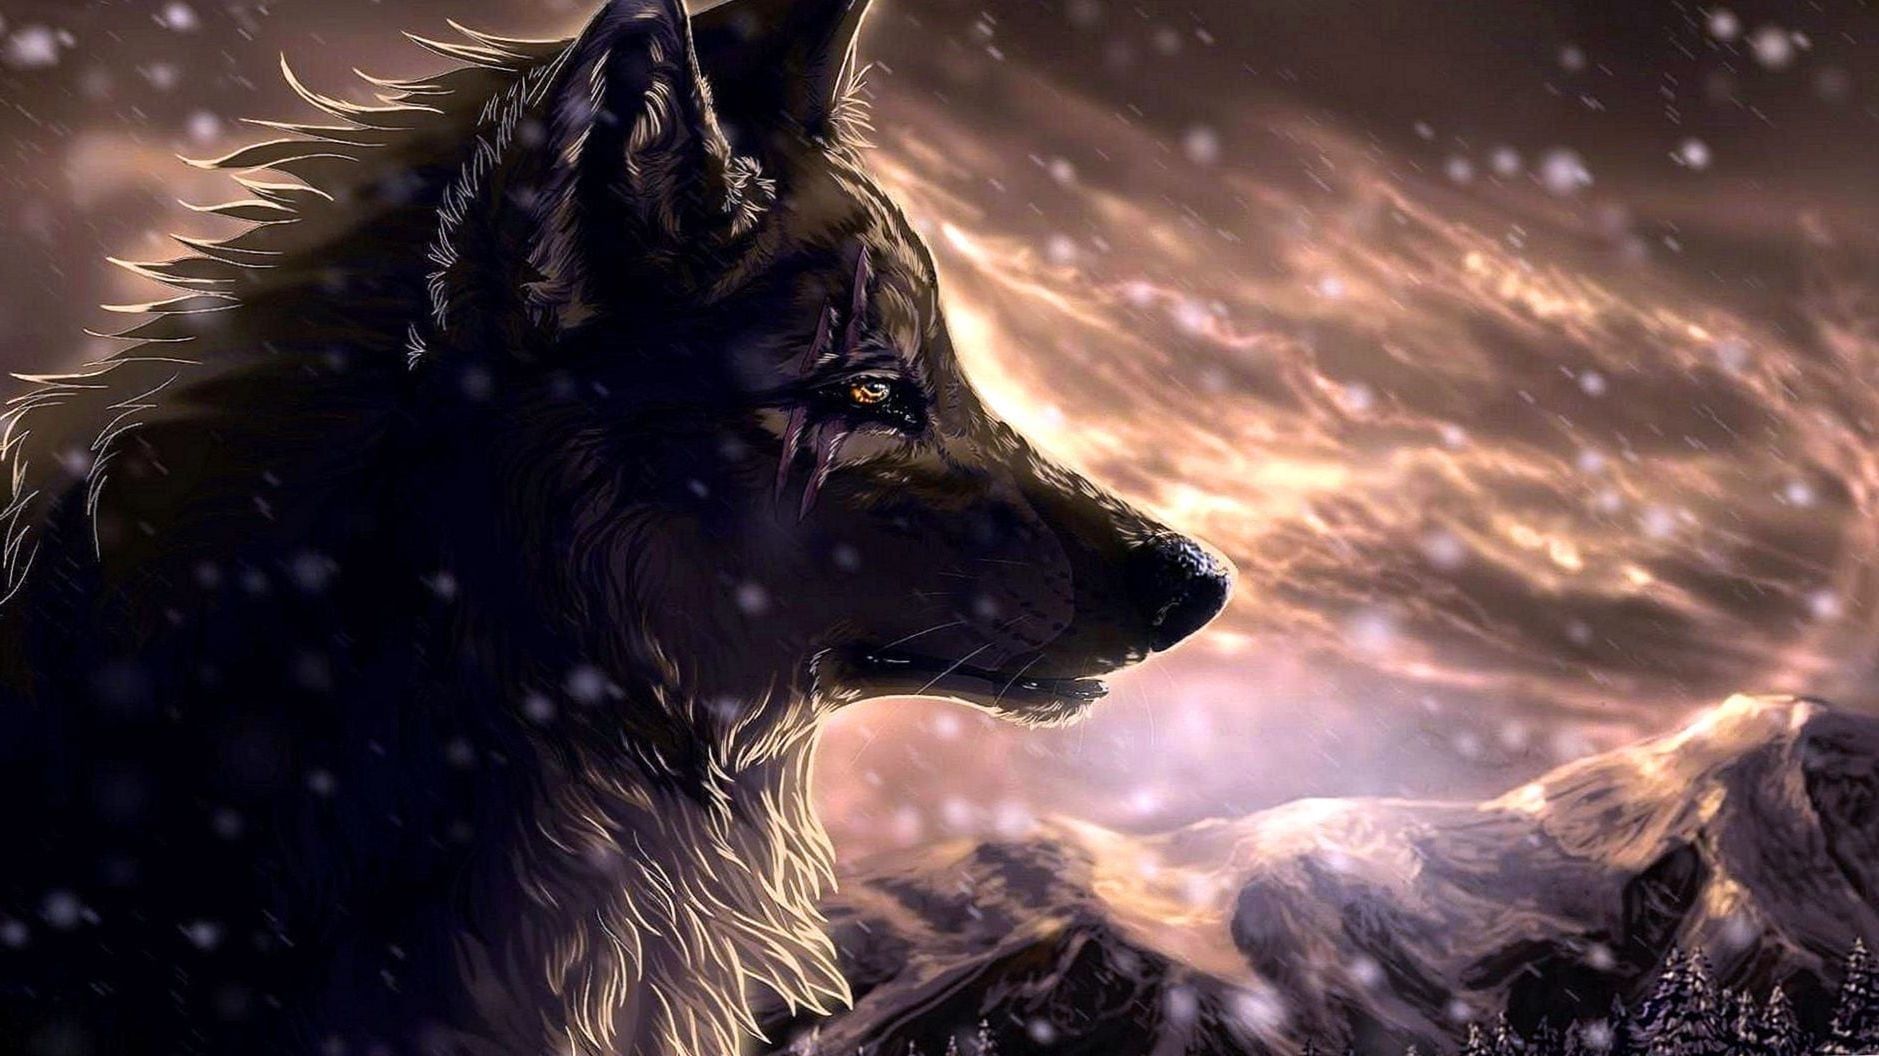 Anime Wolf Wallpaper Full HD. Wolf wallpaper, Wolf background